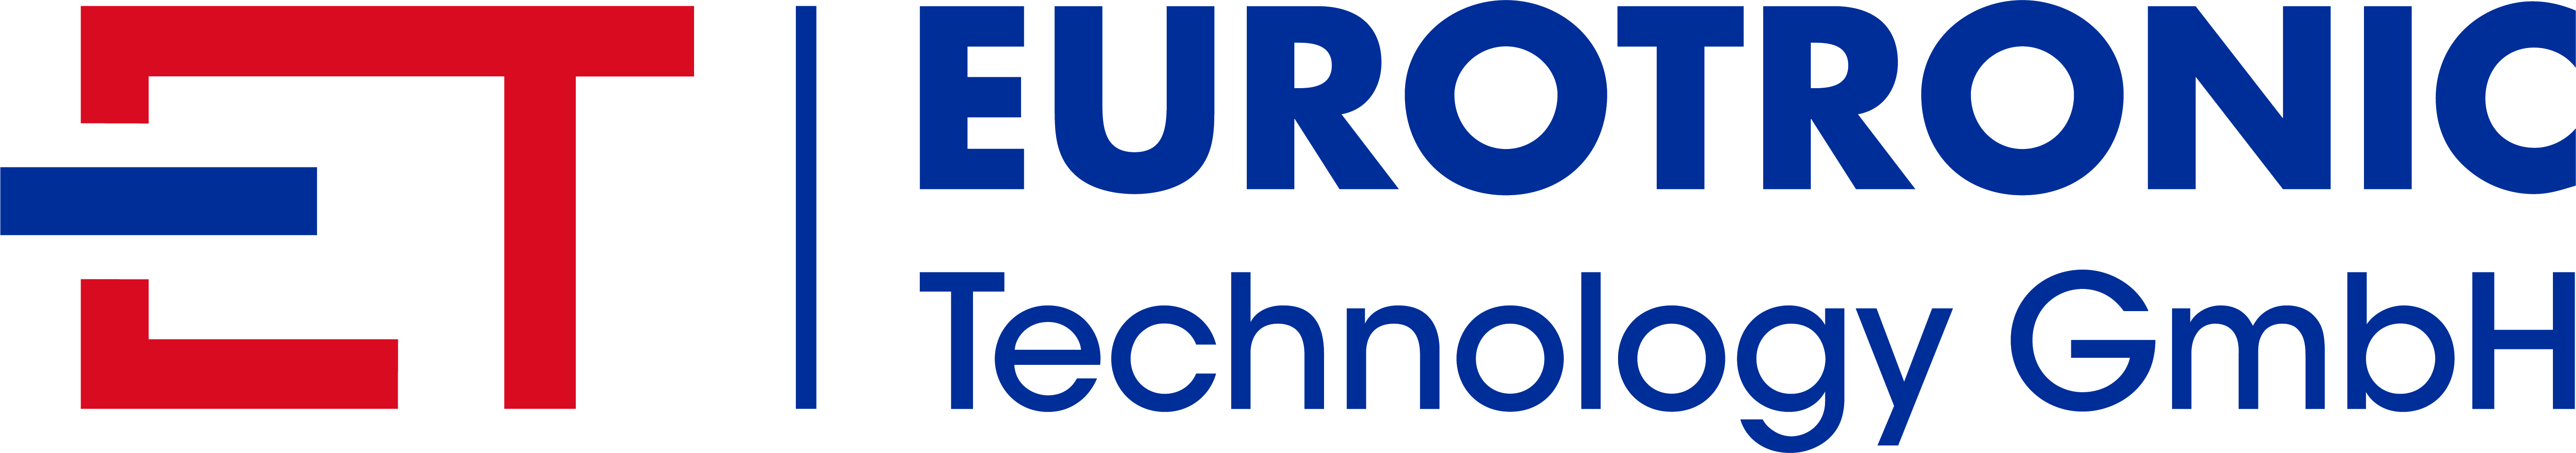 Eurotronic Technology GmbH